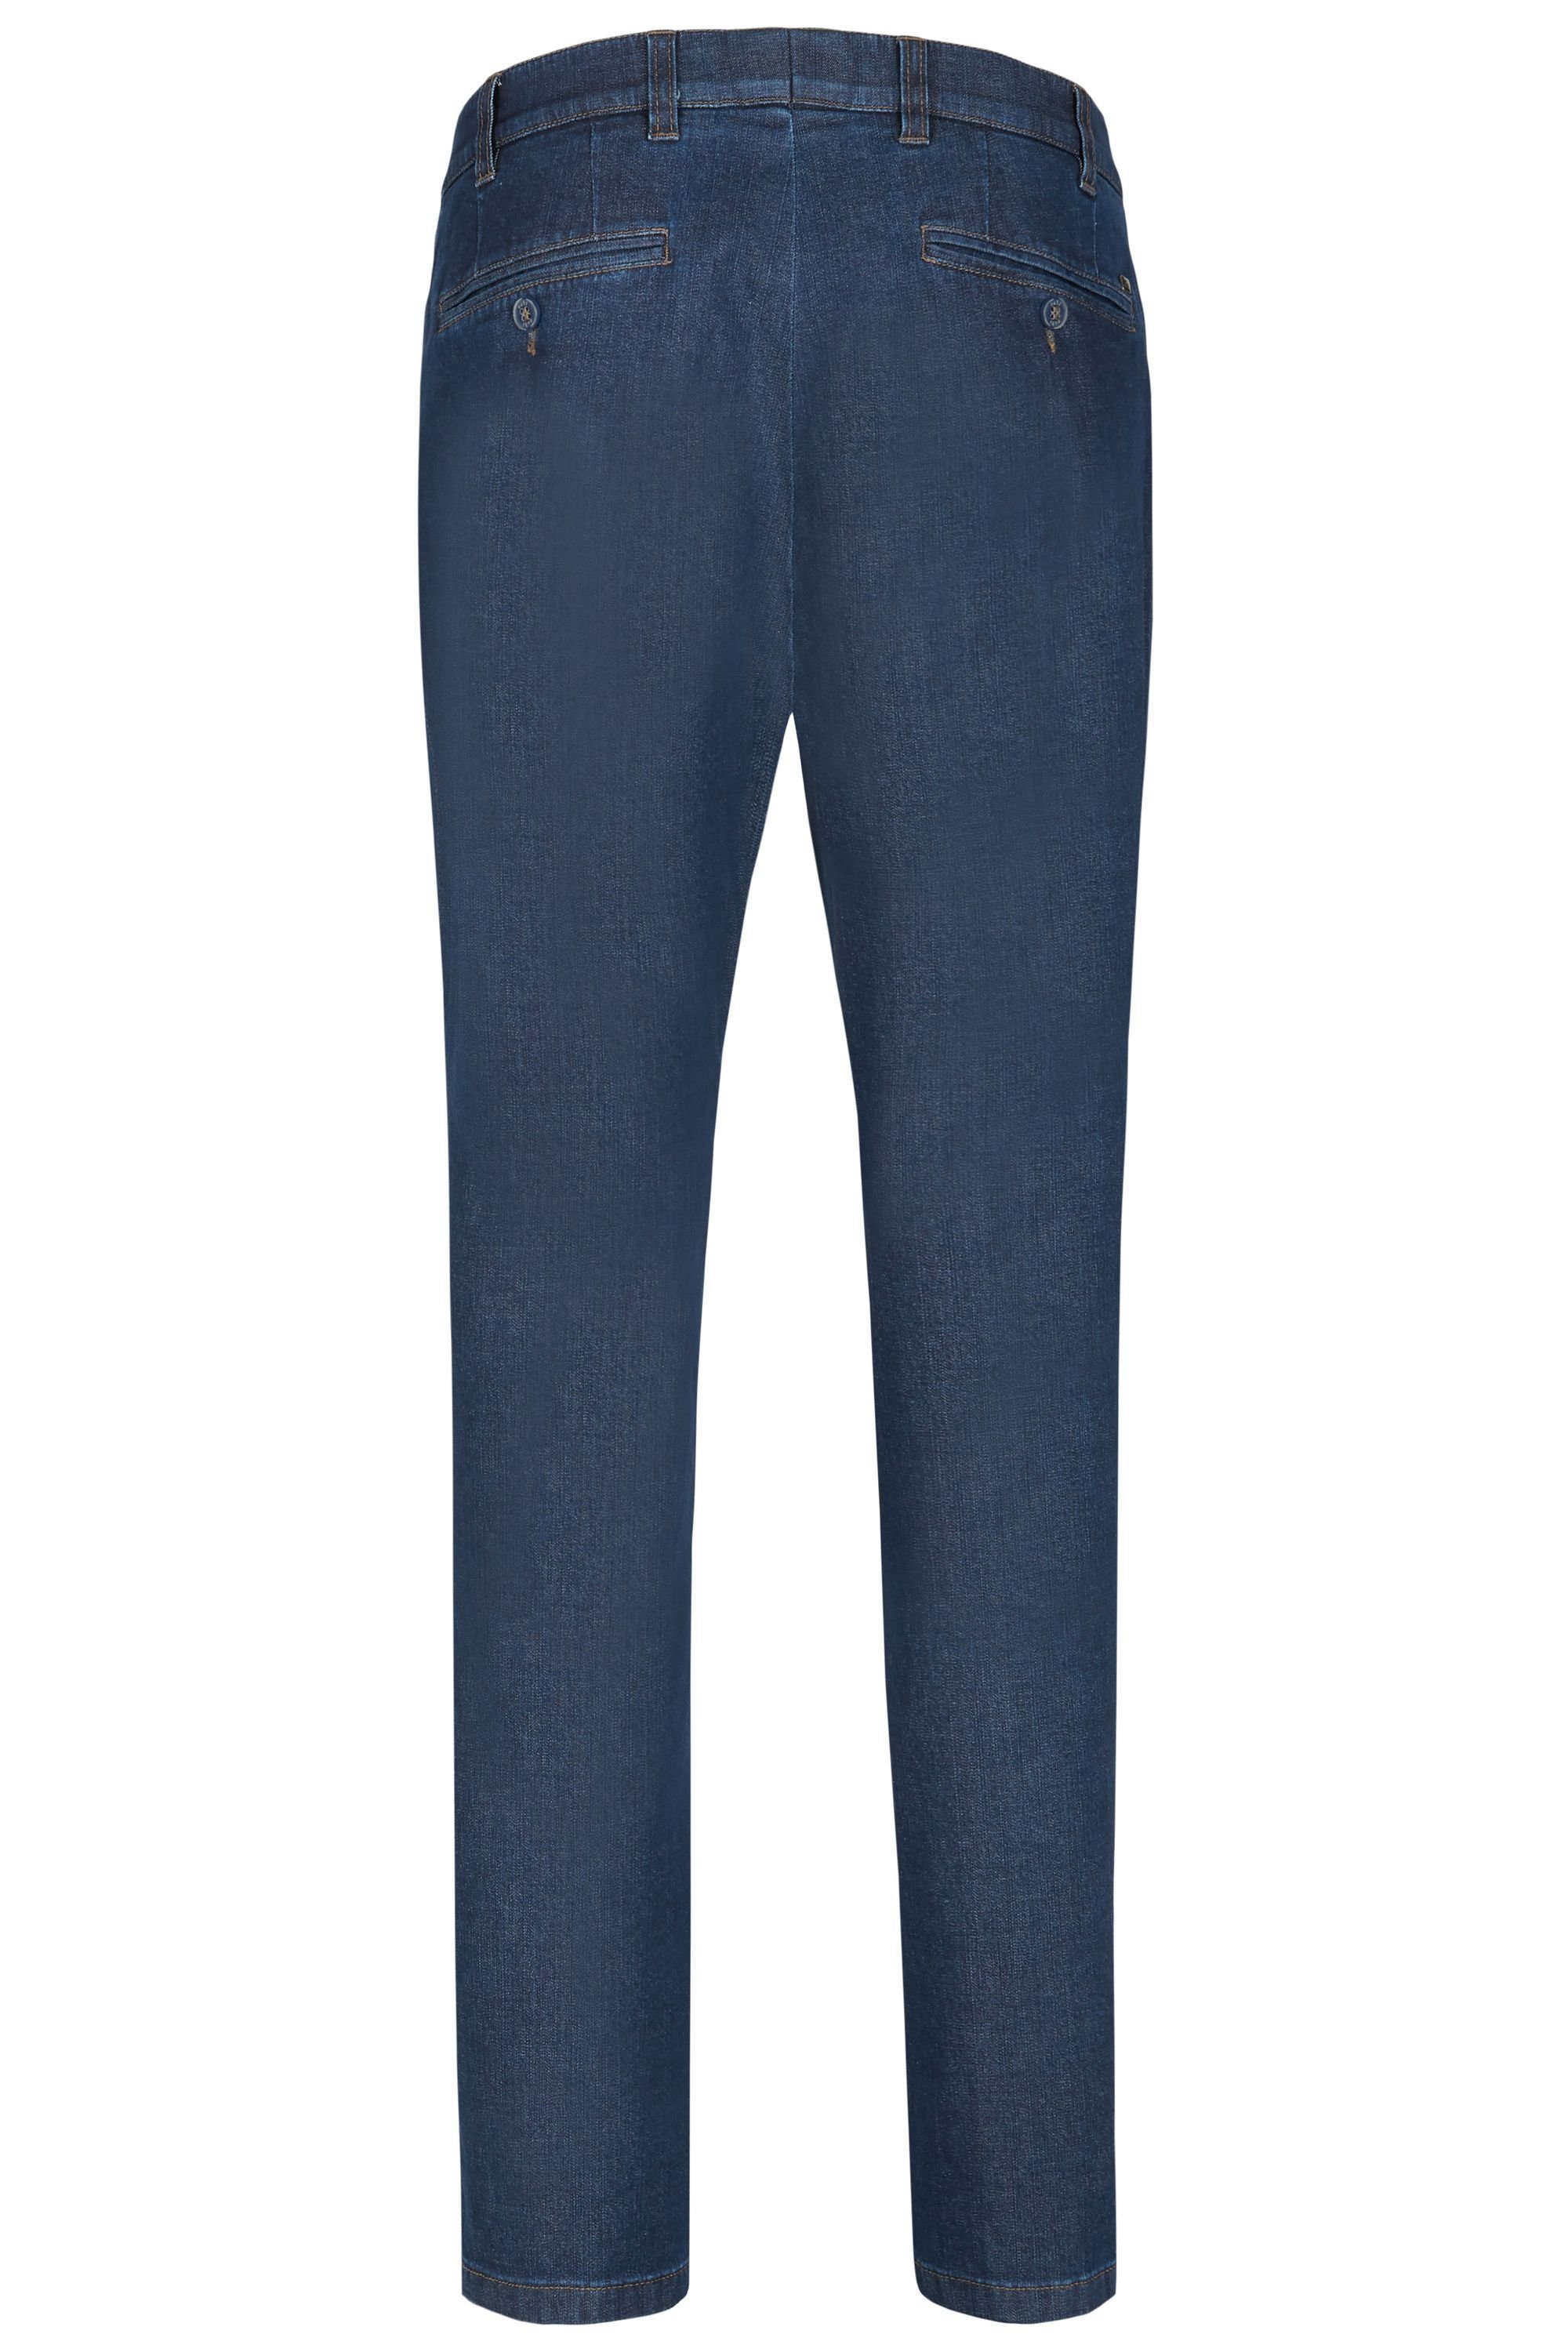 Bequeme Hose Stretch Modell Jeans Herren Fit stone Jeans aubi (46) Perfect 577 aubi: